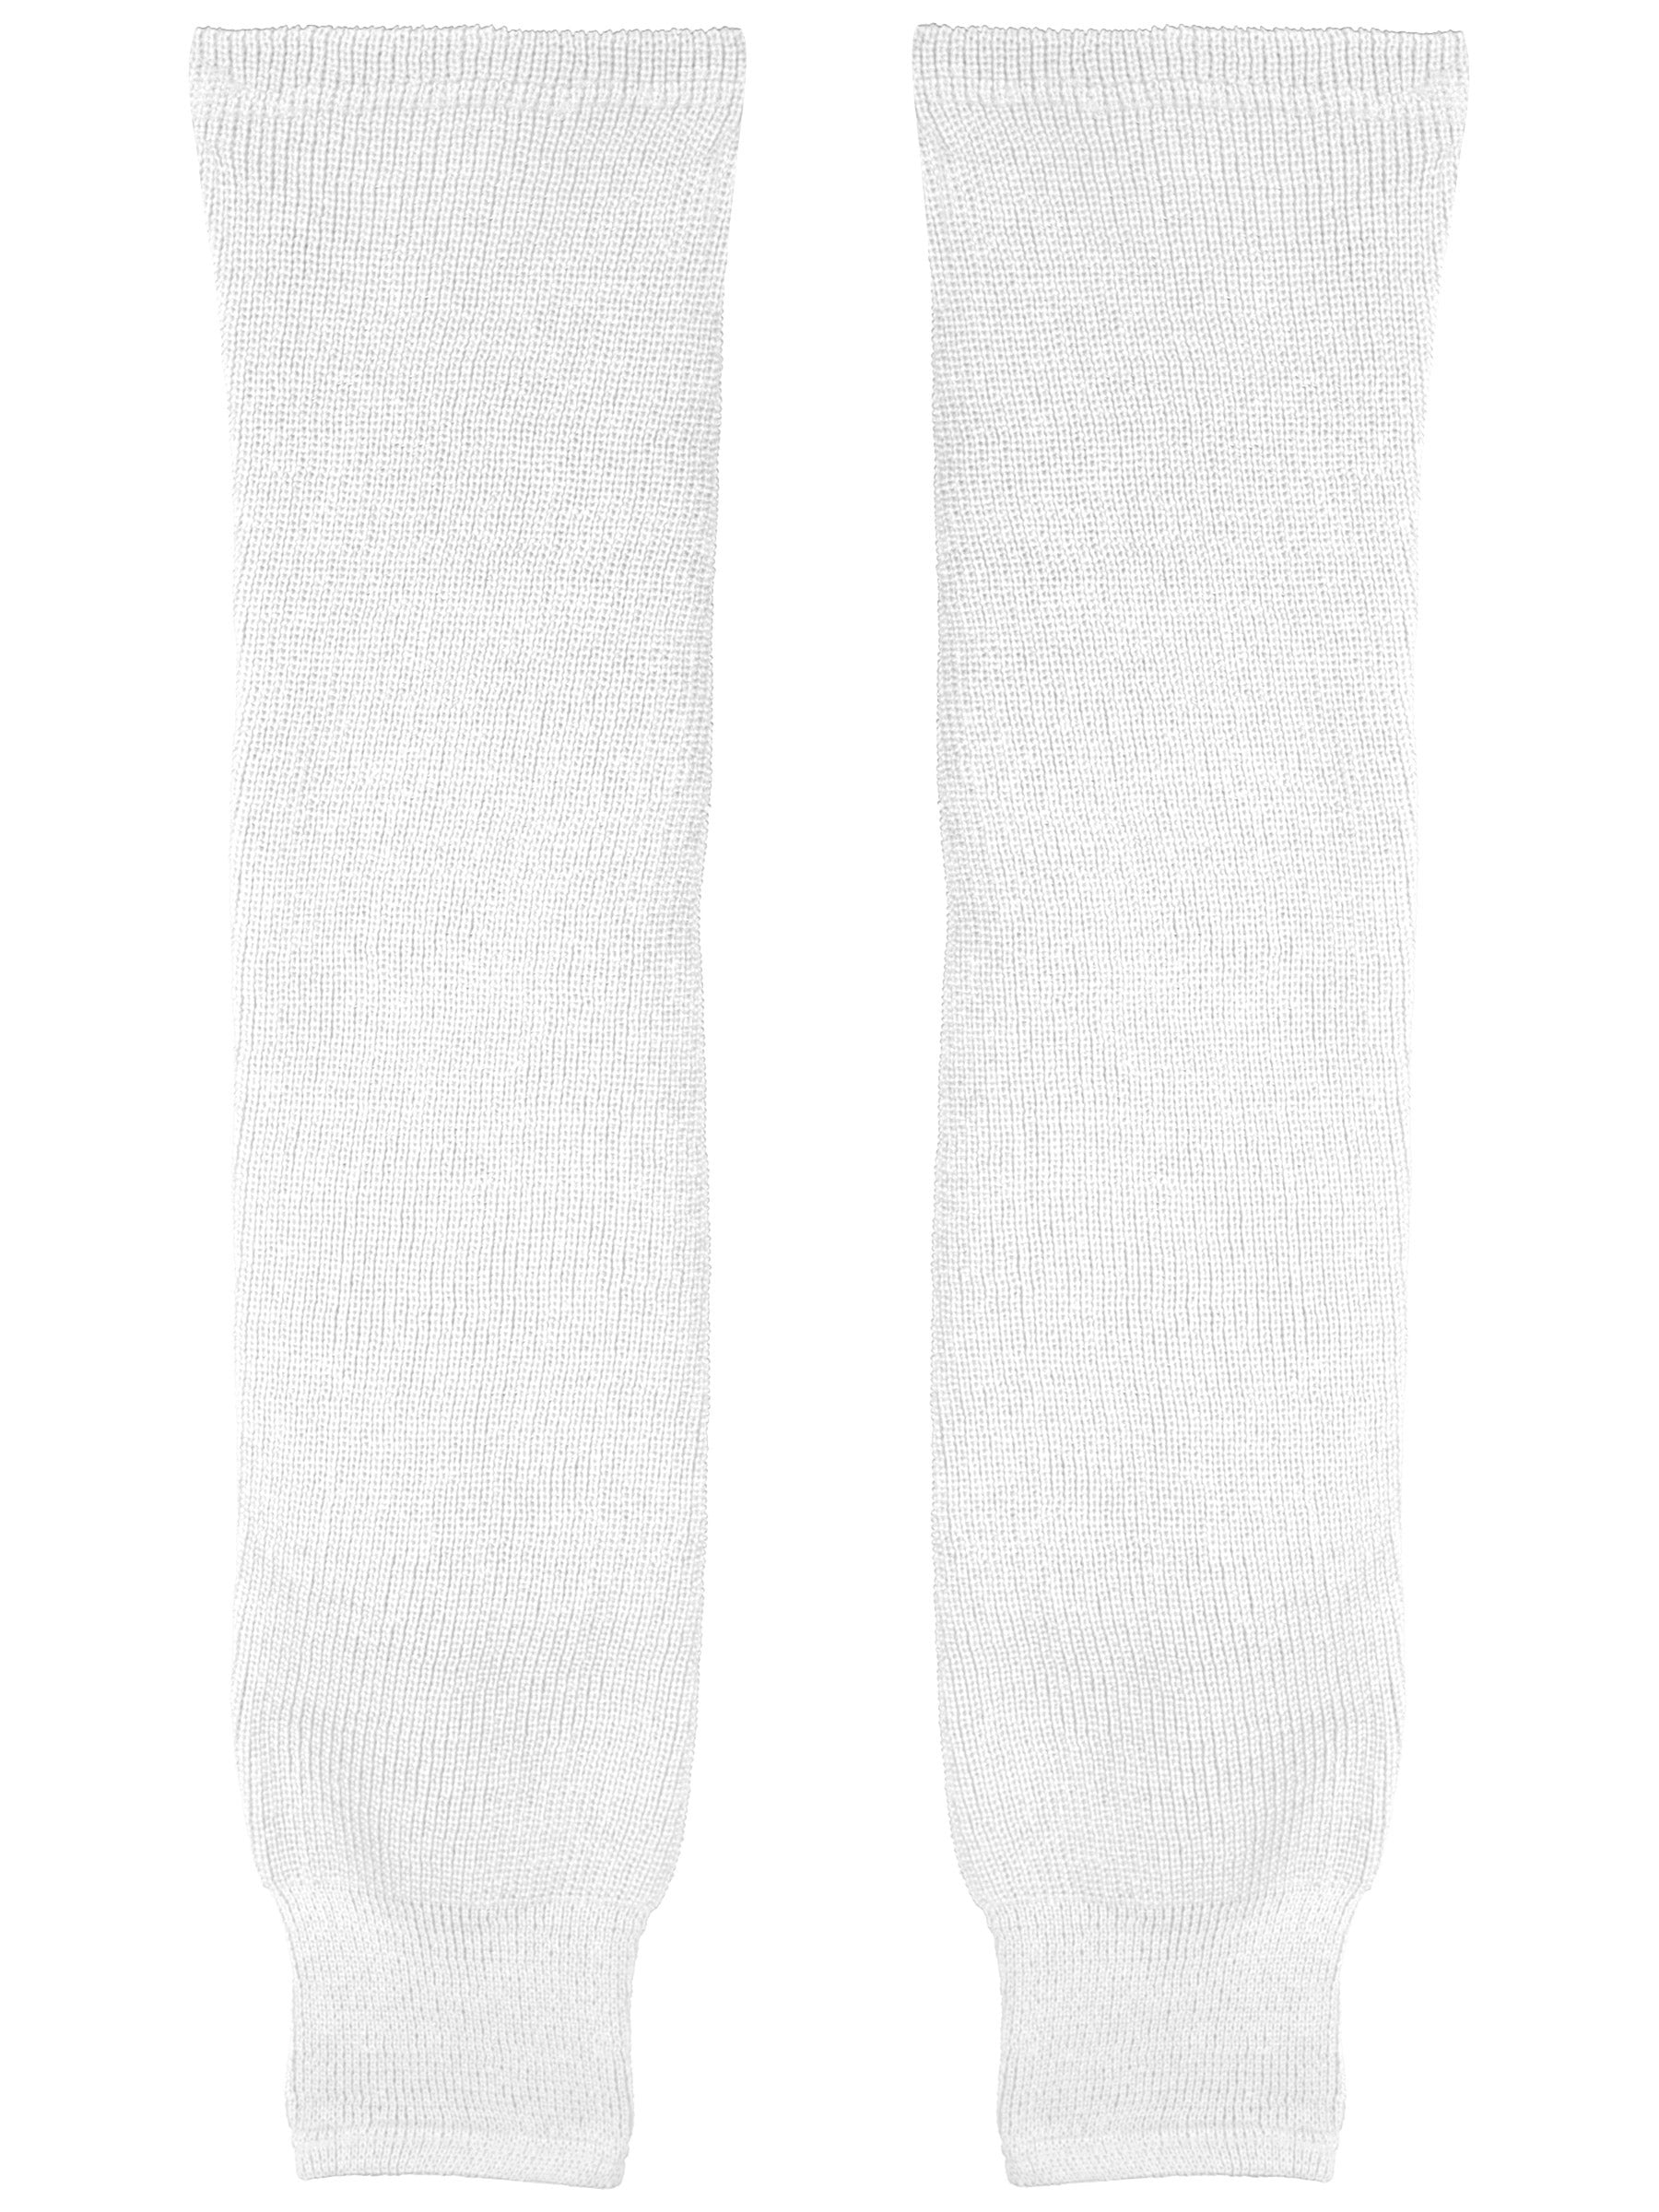 CCM S100P Intermediate Knit Hockey Socks